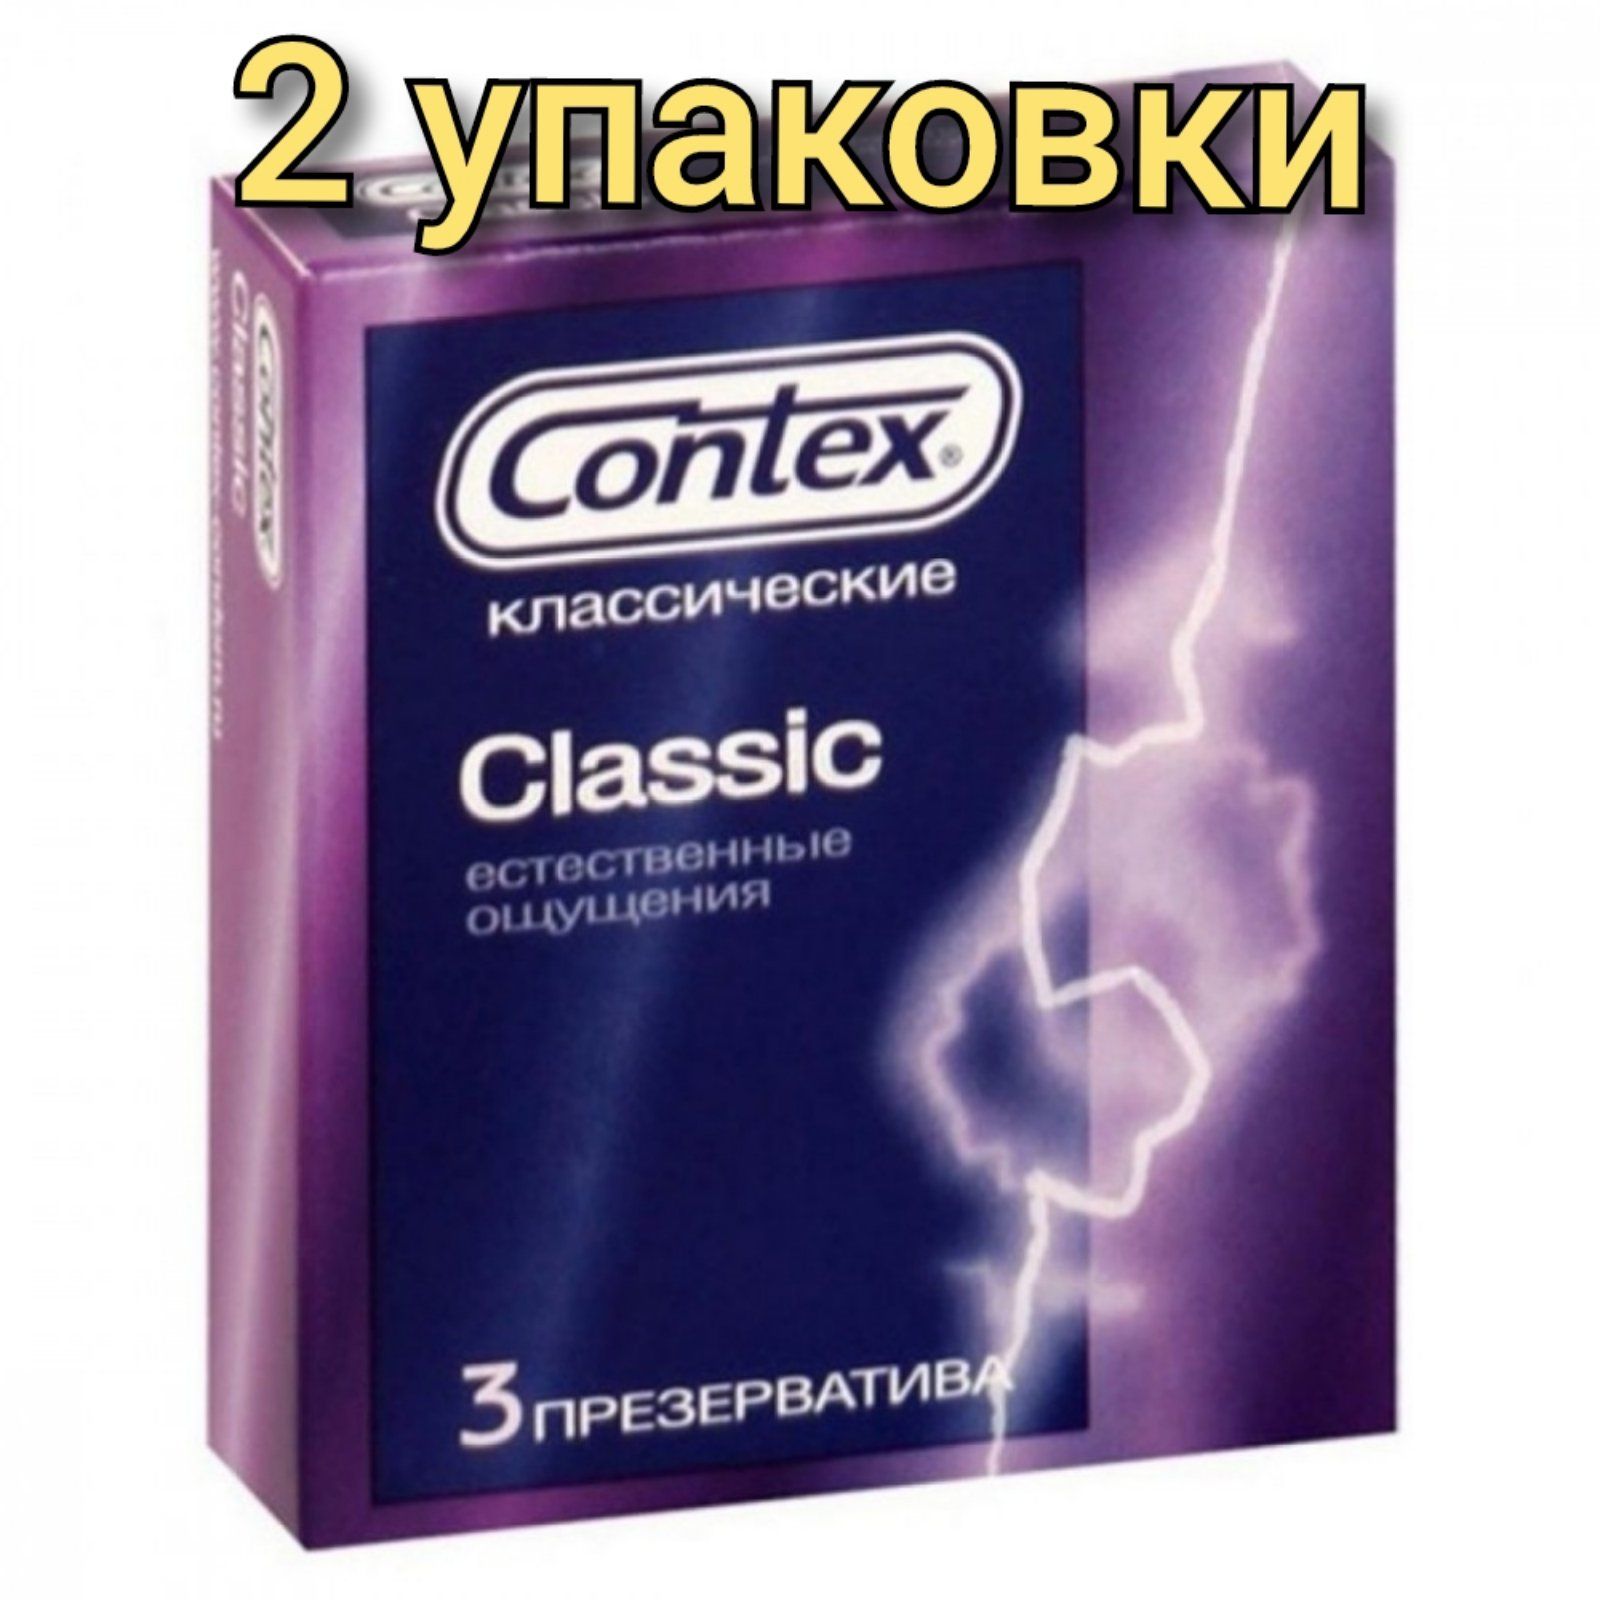 Classic 3.3. Контекс презервативы Classic (в силиконовой смазке) №3. Презервативы Контекс (Contex) Classic. Презервативы Контекс Классик 3 шт. Contex (Контекс) презервативы Classic 3 шт.